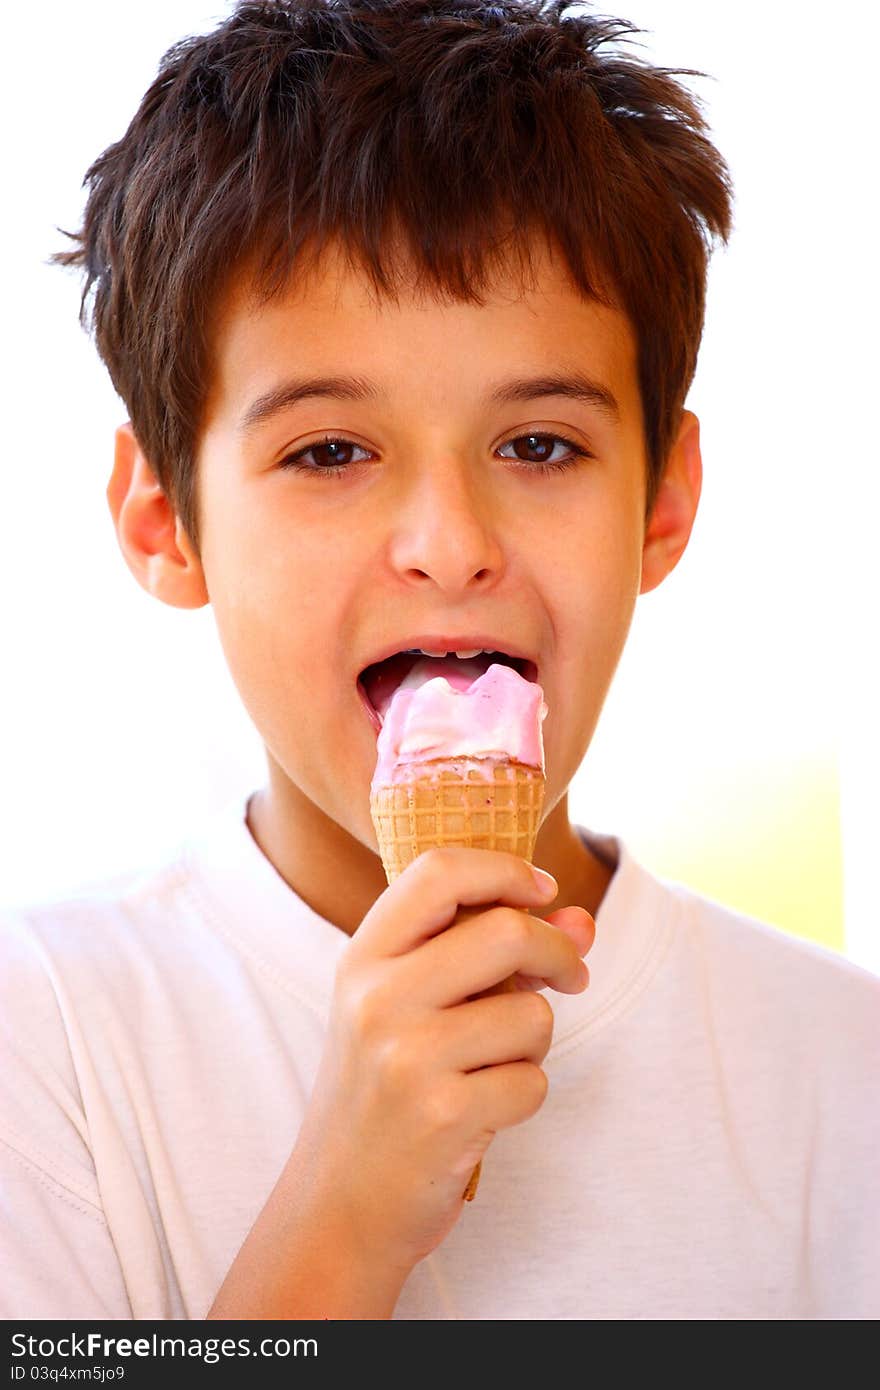 A boy enjoying his ice-cream closeup portrait shot